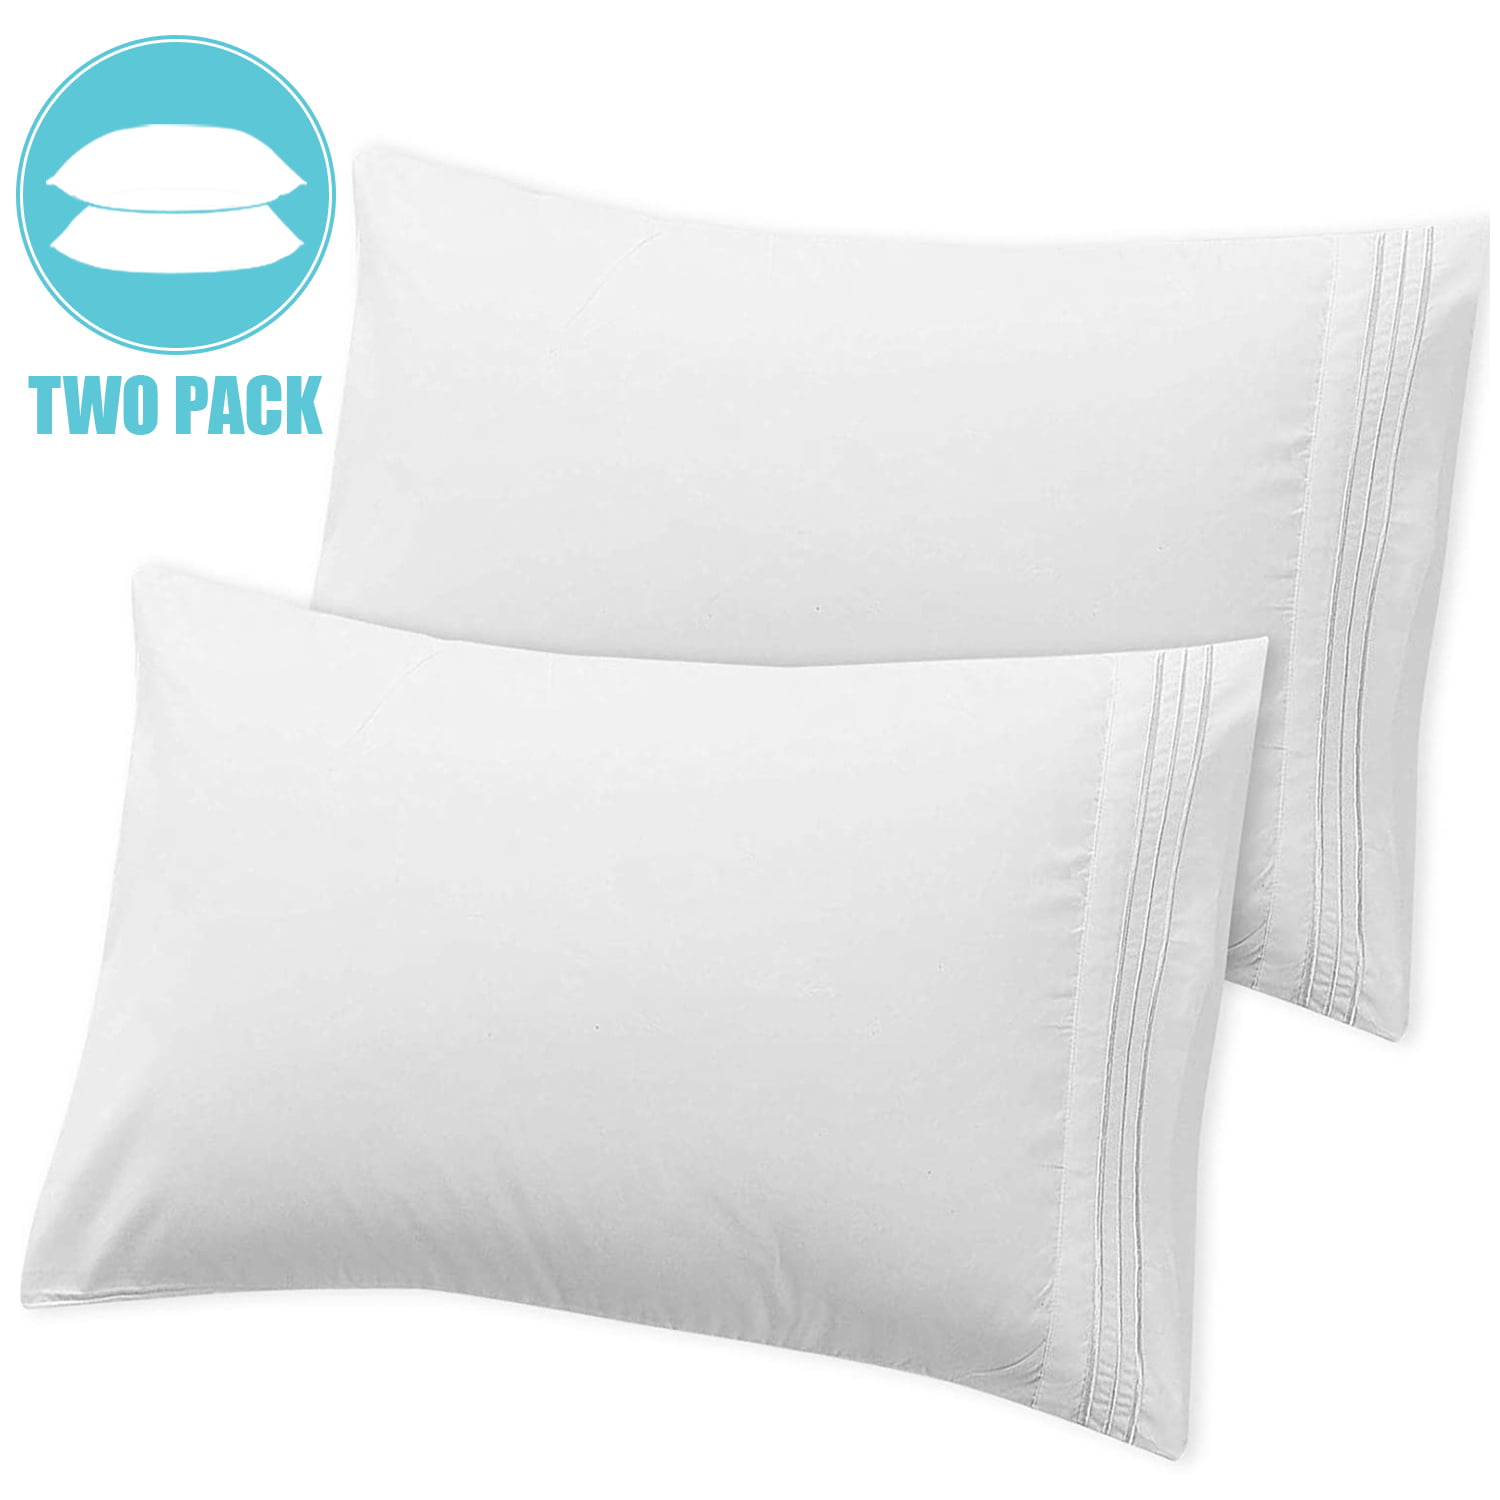 2 Set Microfiber Pillow Cases Standard King CK Size Envelope Closure Pillowcases 